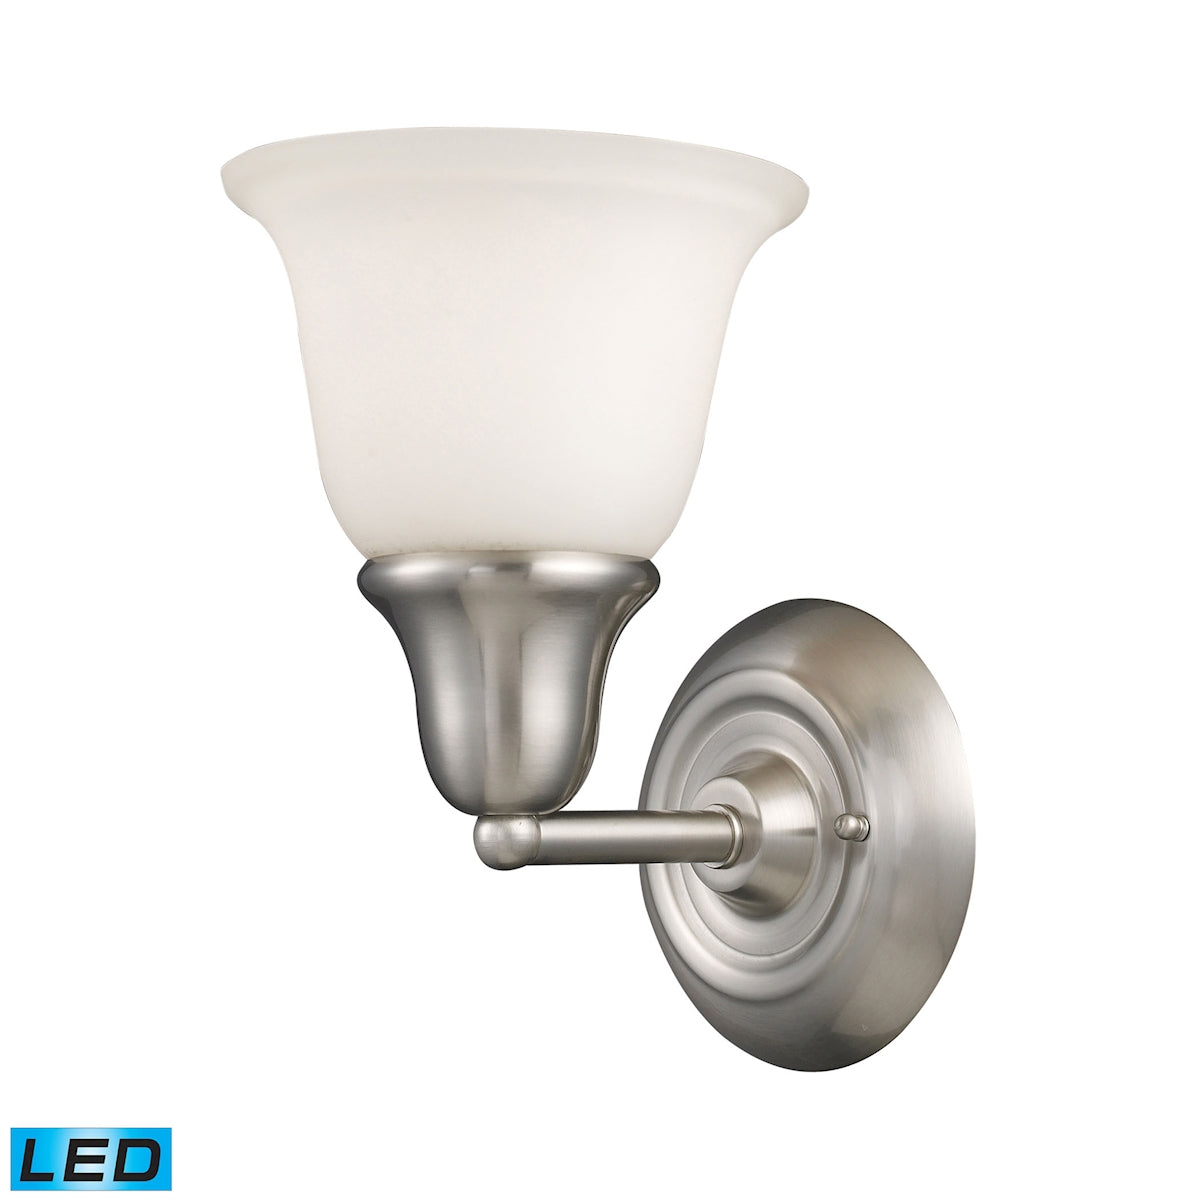 ELK Lighting 67020-1-LED Berwick 1-Light Vanity Lamp in Brushed Nickel with White Glass - Includes LED Bulb